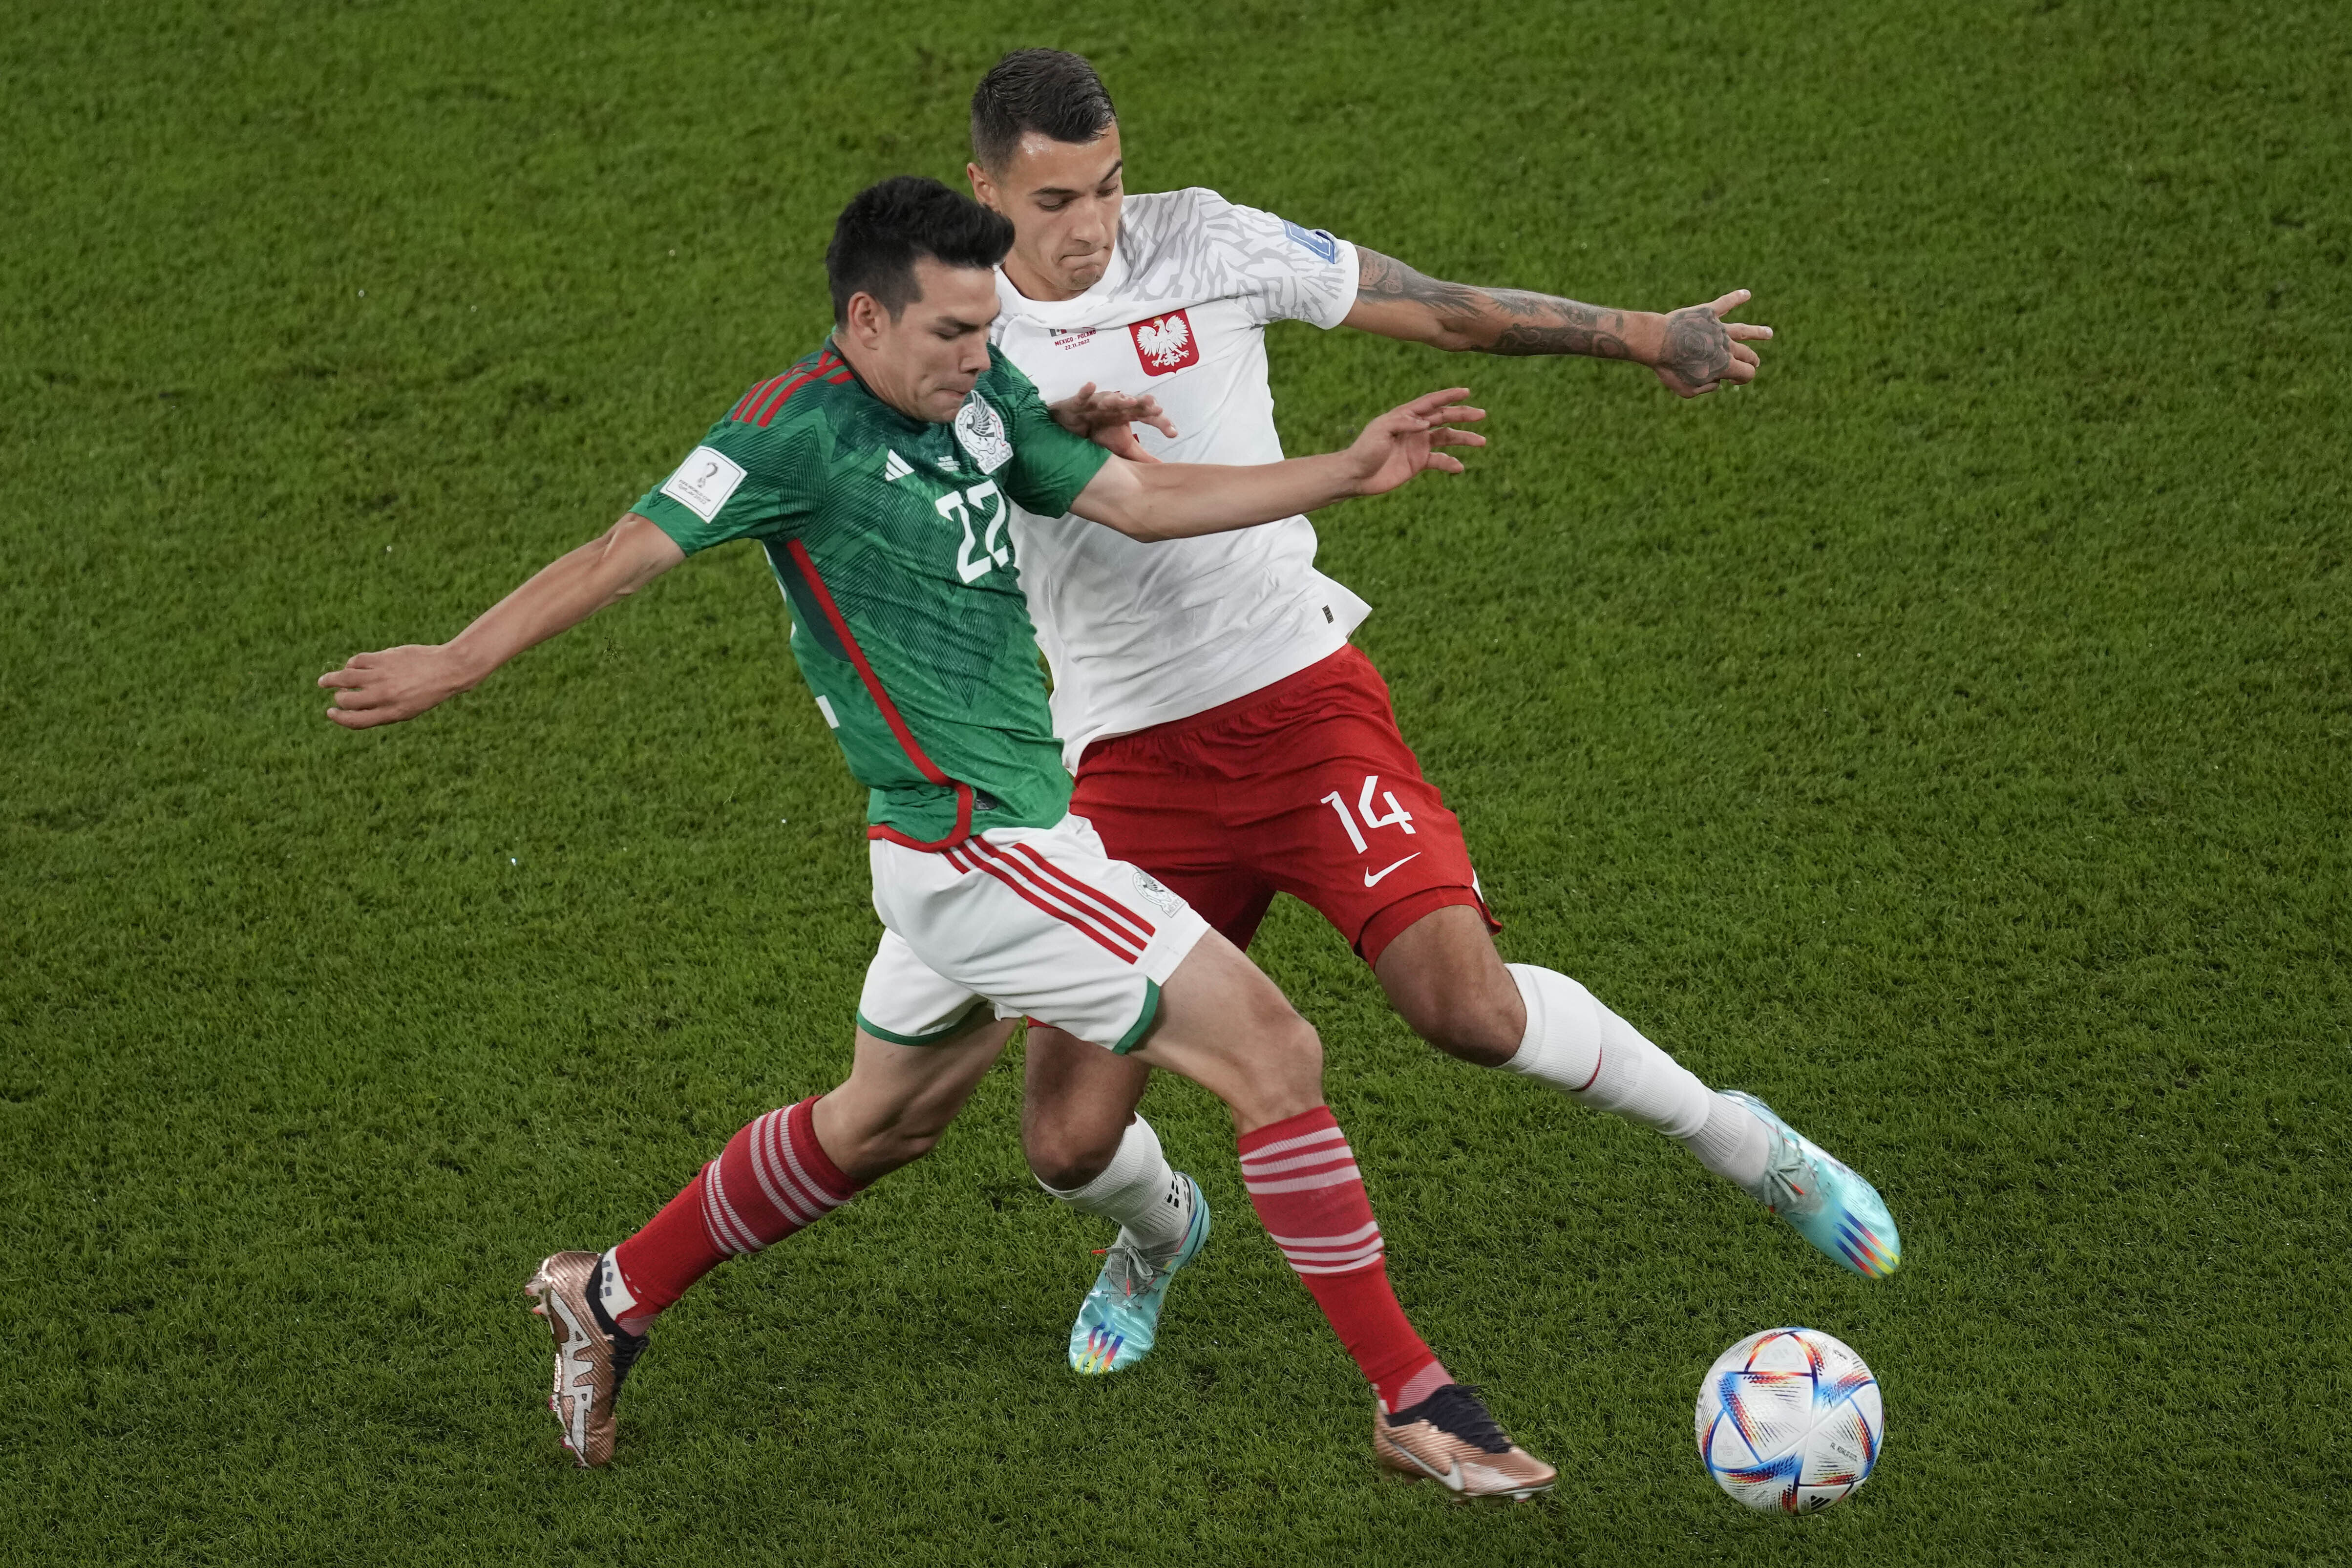 Mexico 0-0 Poland: Robert Lewandowski has penalty saved in World